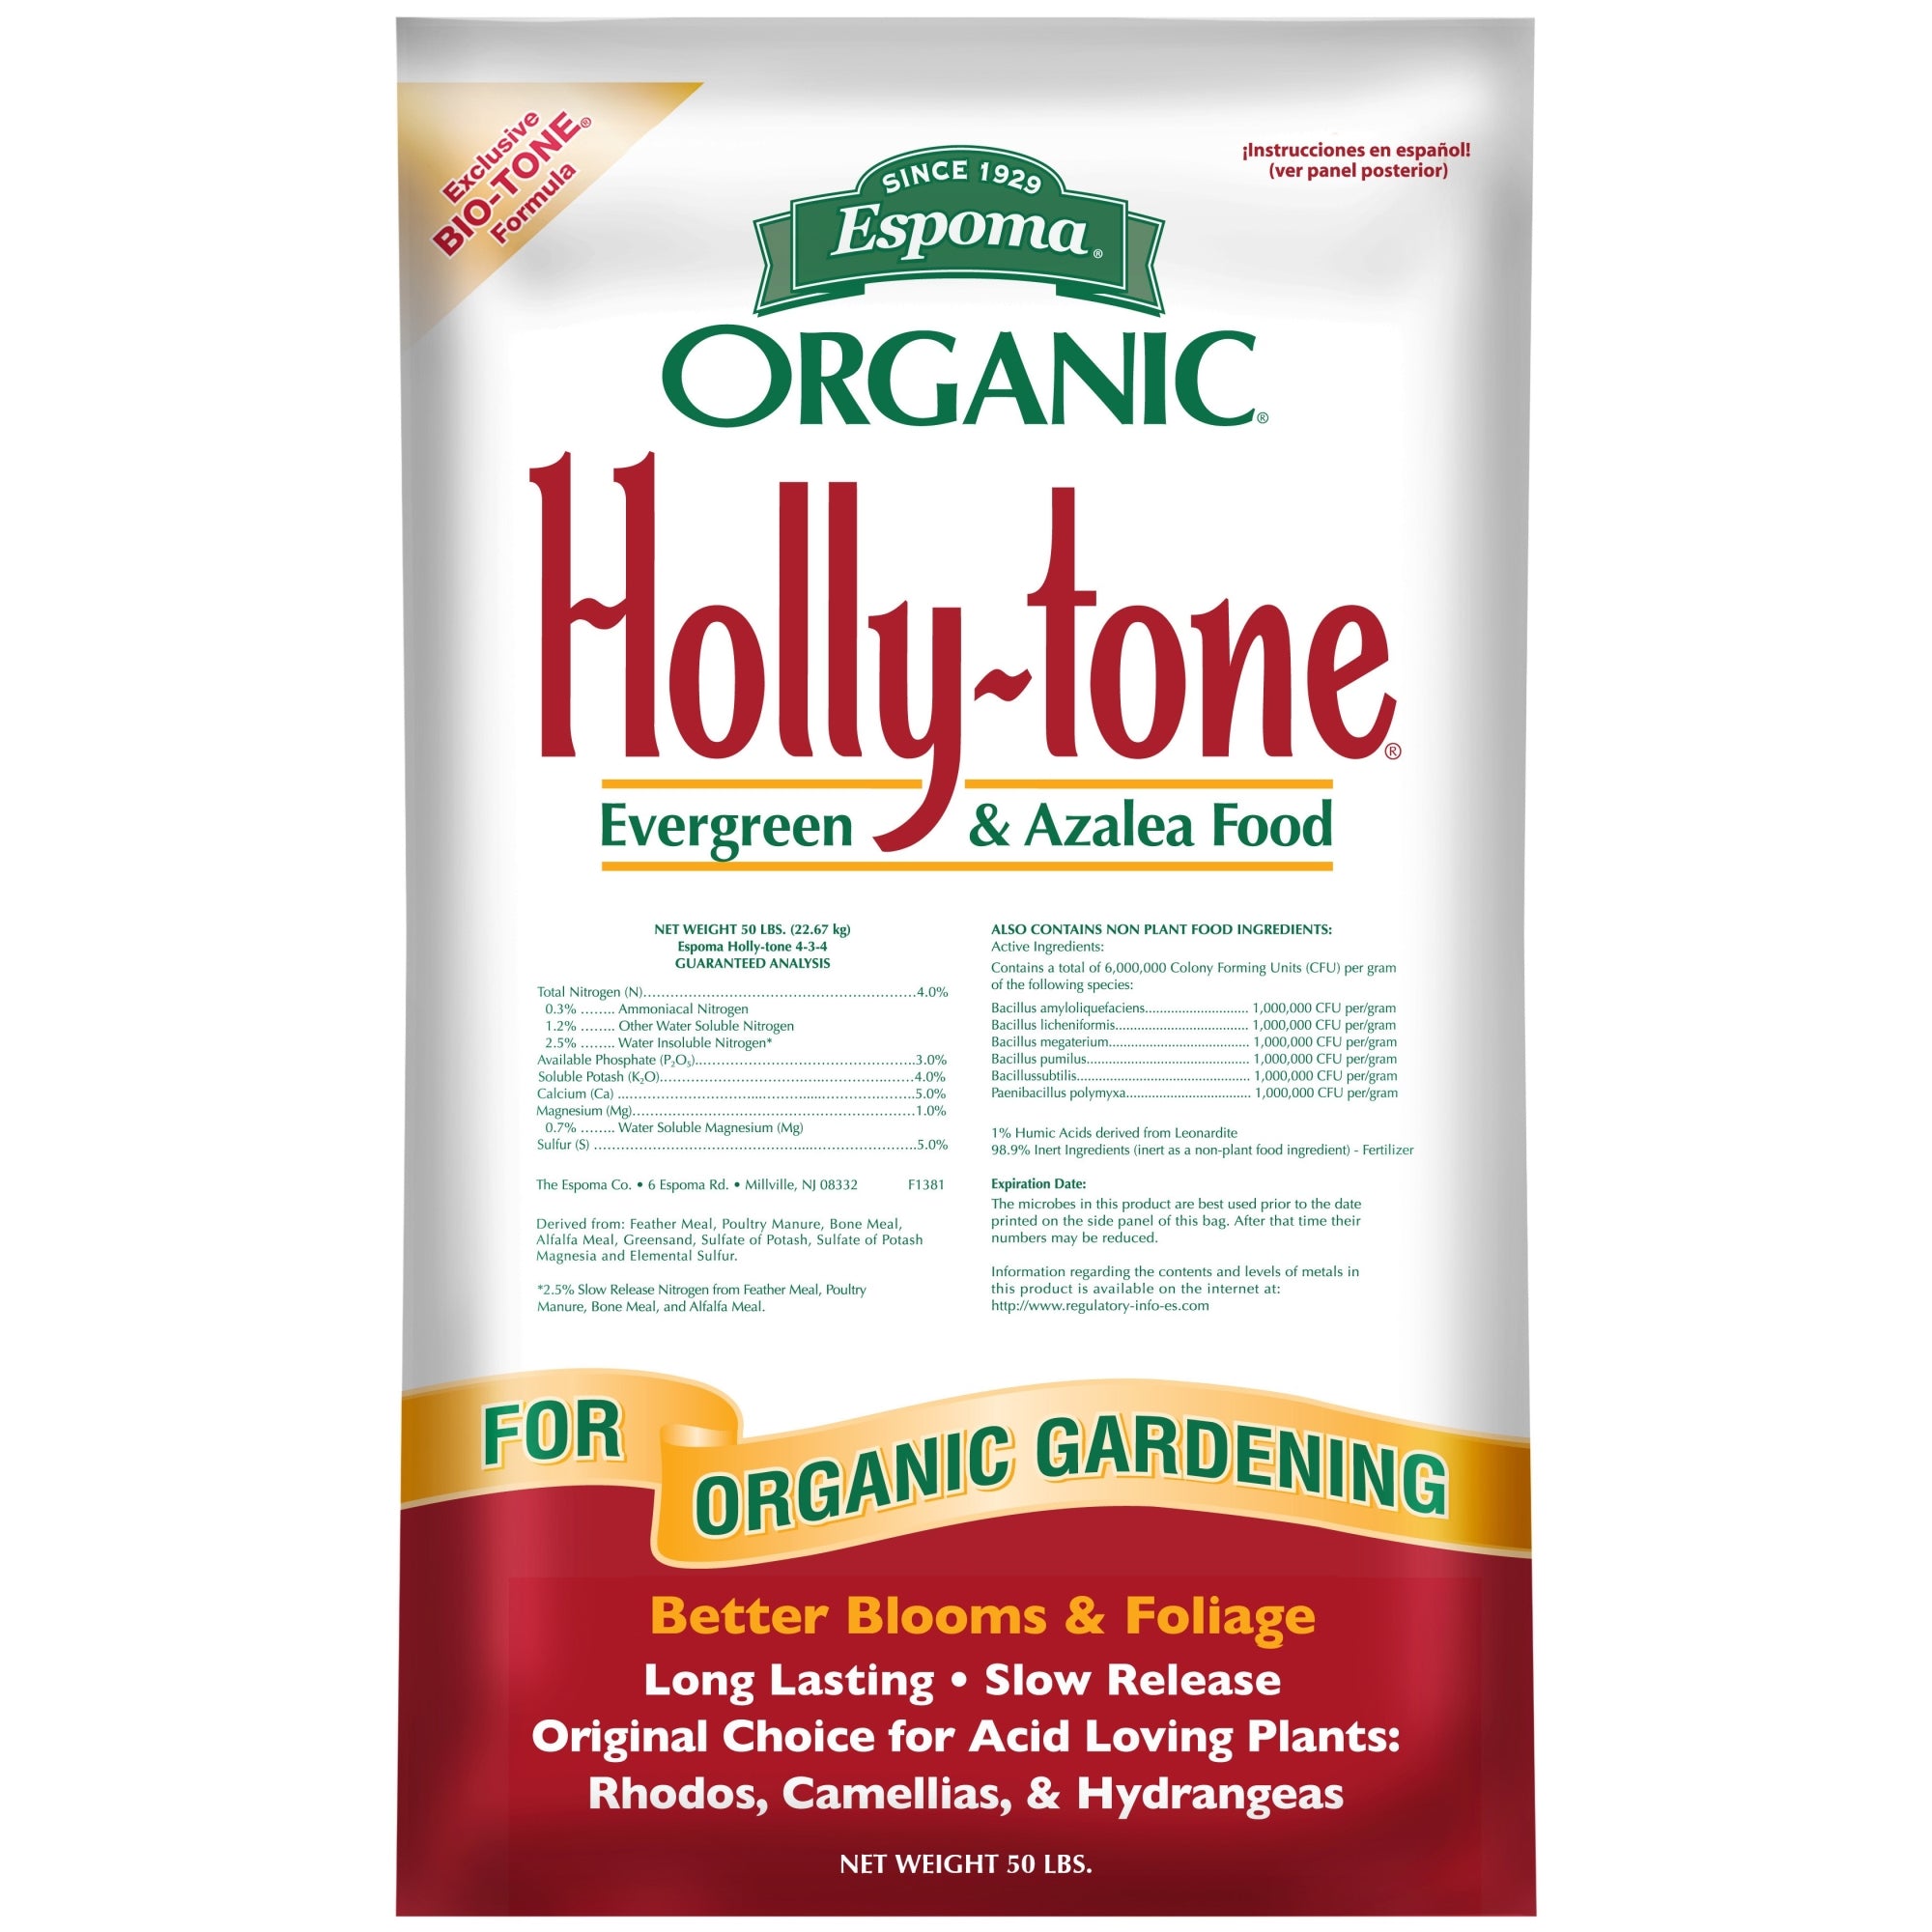 Espoma Organic Holly-tone 4-3-4 Evergreen & Azalea Plant Food for Acid Loving Plants, Better Blooms & Foliage